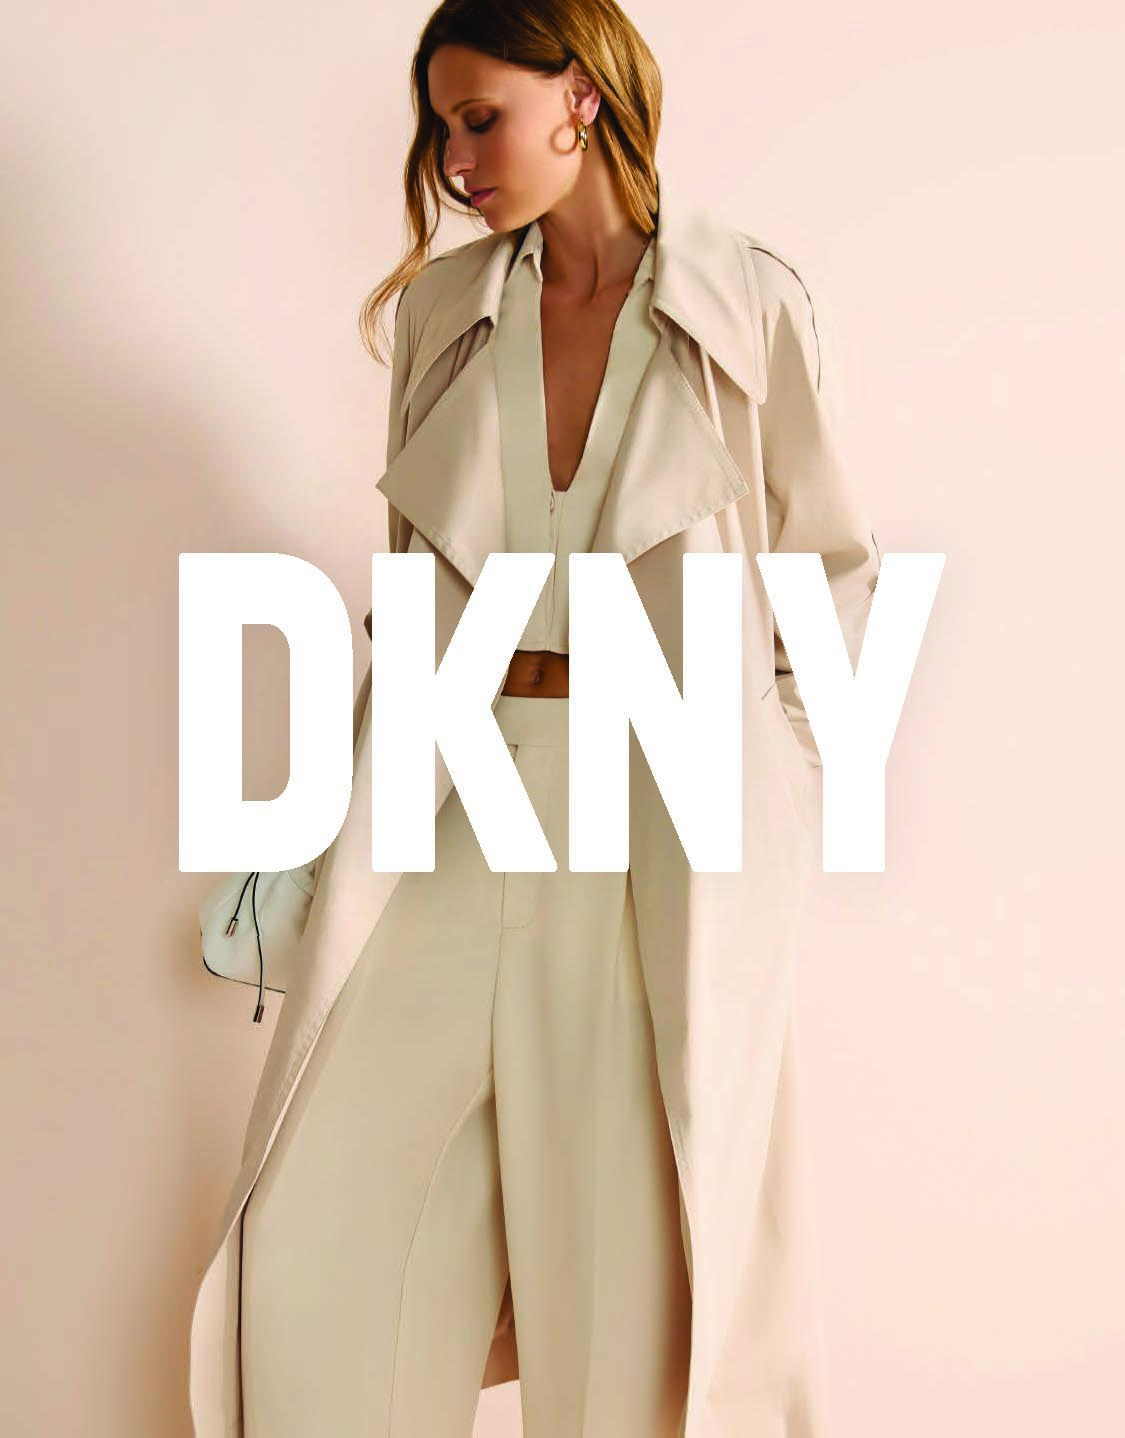 DKNY Fashion Advertising I Greg Sorensen I Fashion & Beauty Photographer I NYC